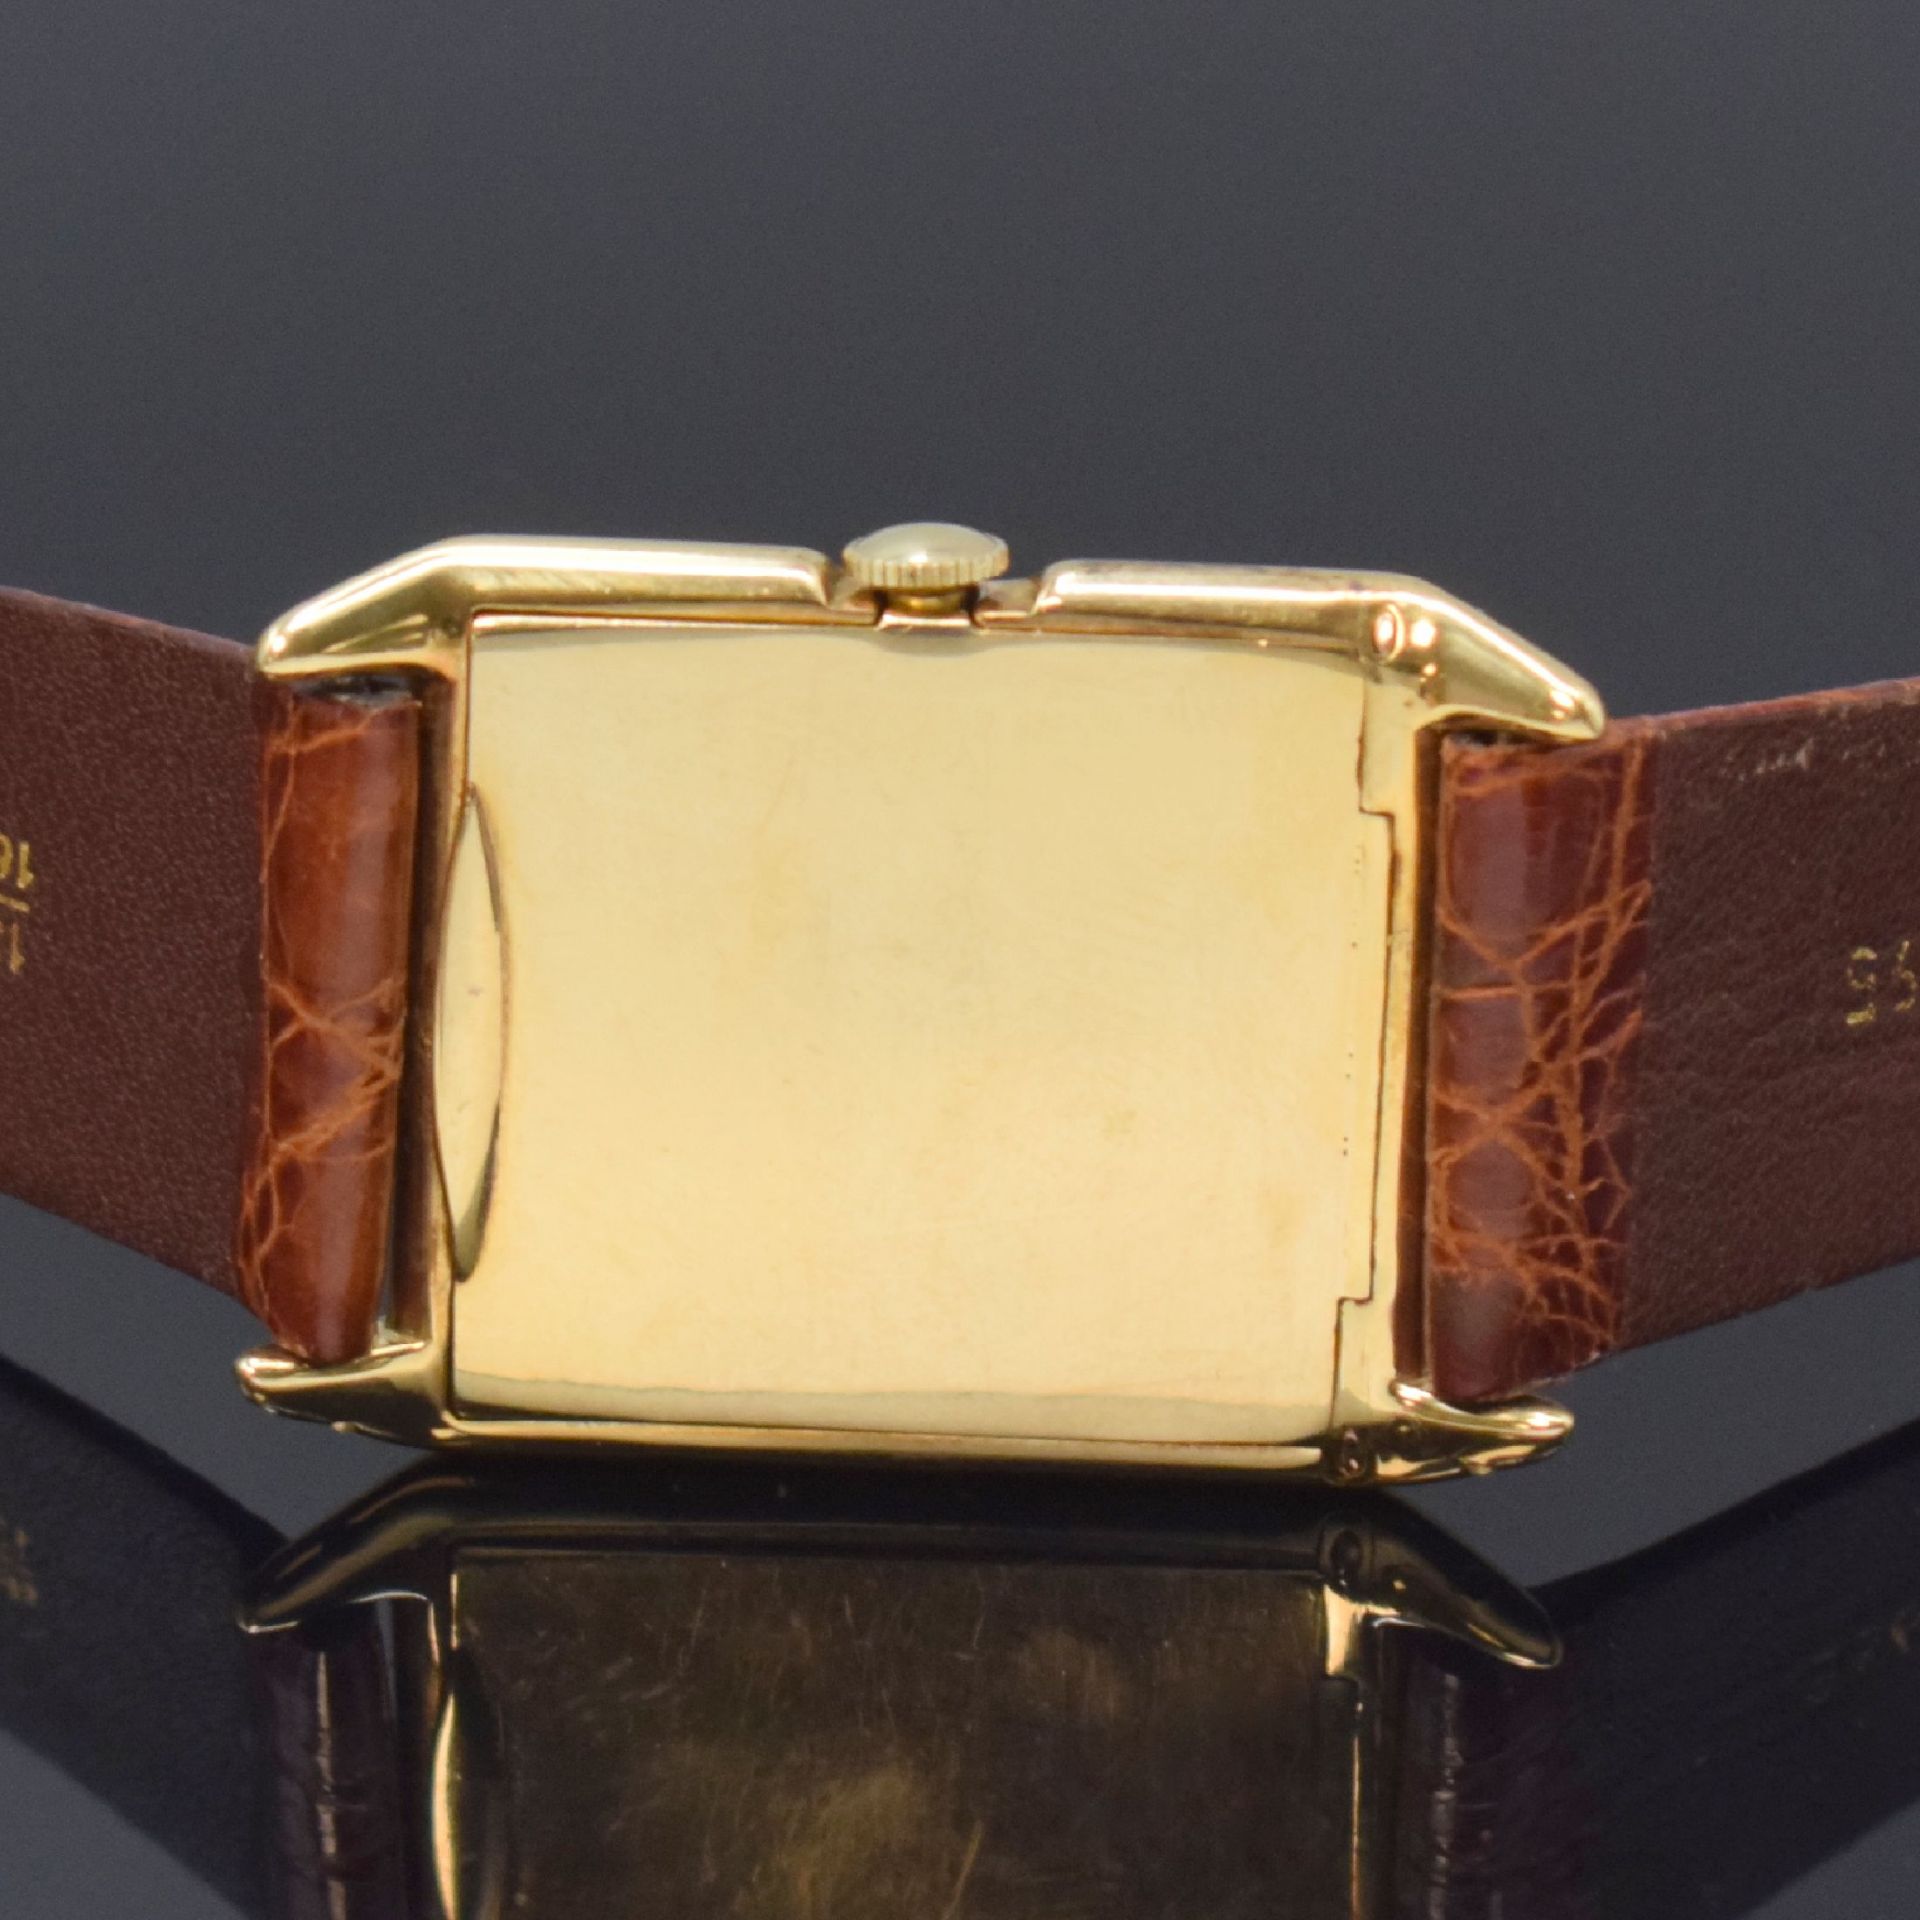 IWC / Tiffany & Co. rechteckige Armbanduhr in 18k - Image 4 of 6